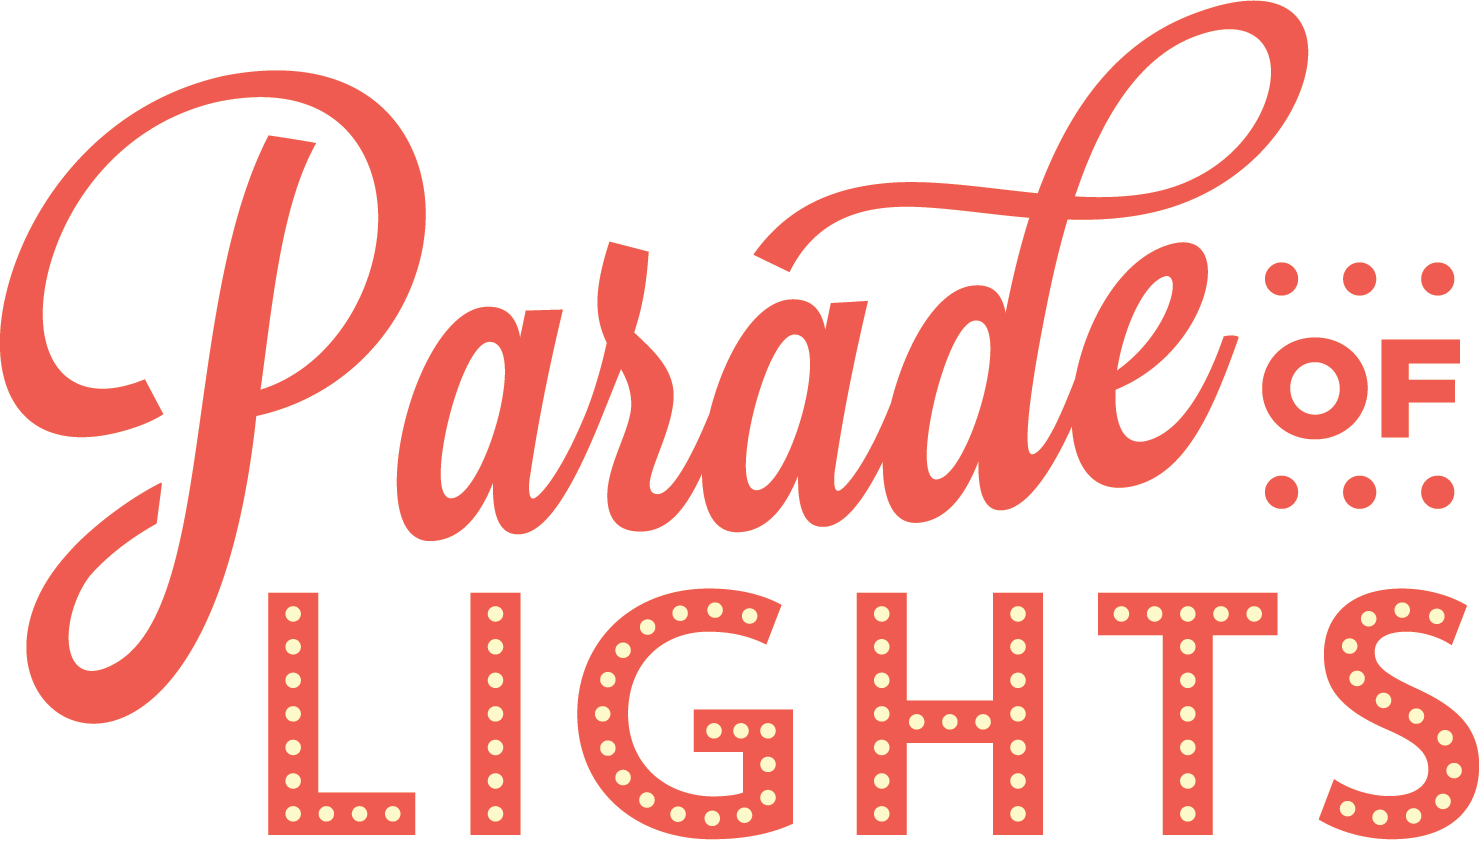 Parade Of Lights